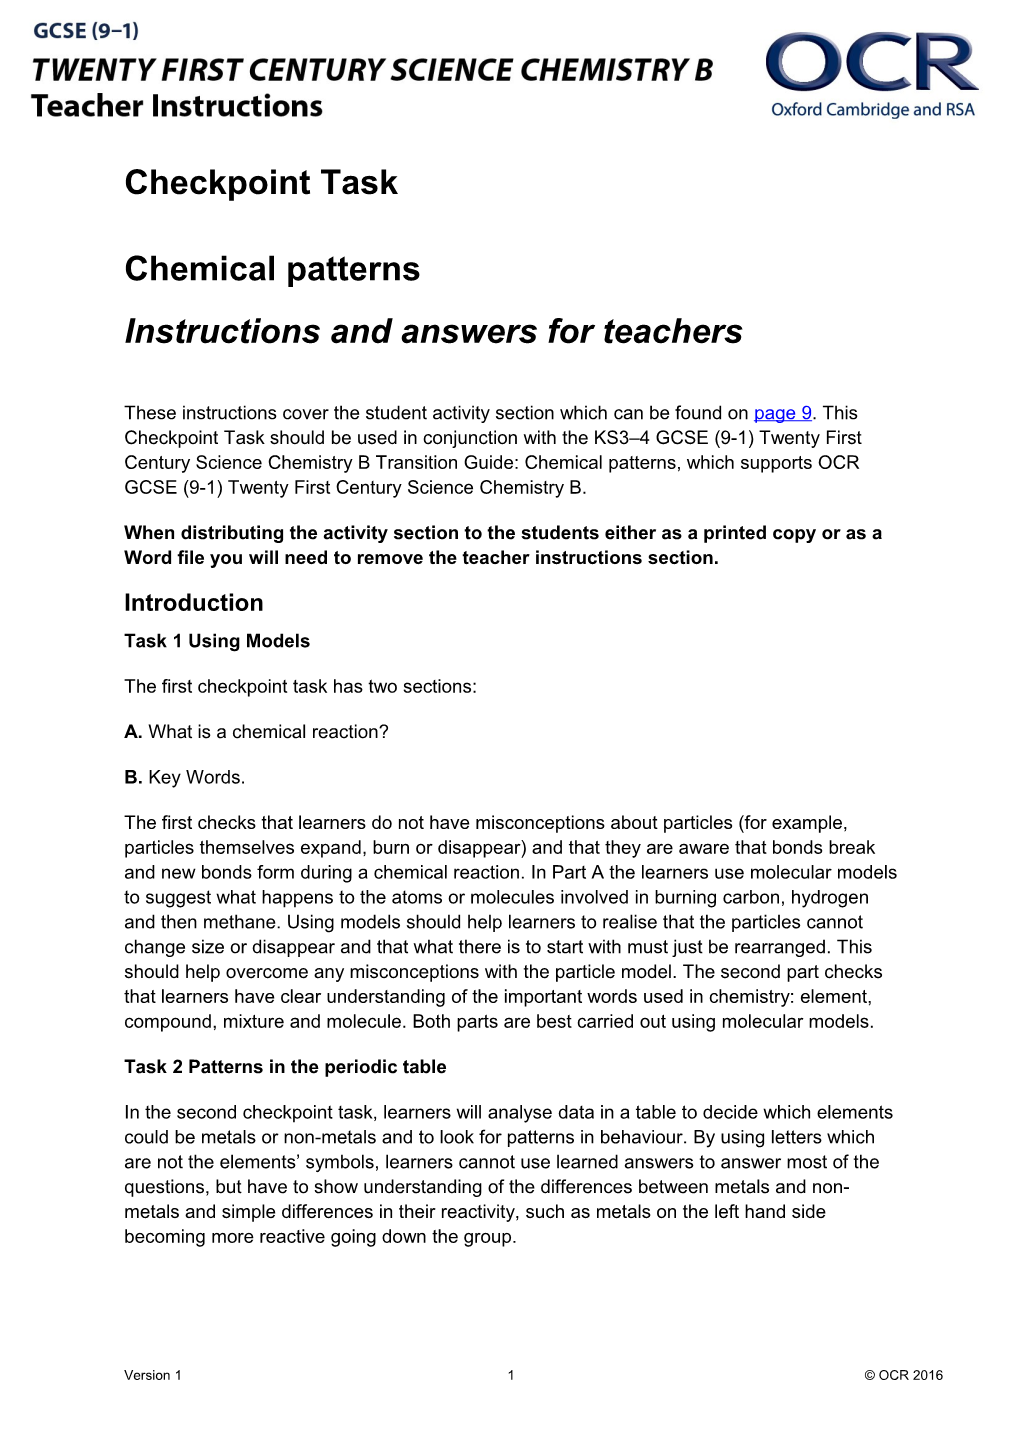 OCR GCSE (9-1) Twenty First Century Science Chemistry B Checkpoint Task - C2 Chemical Patterns